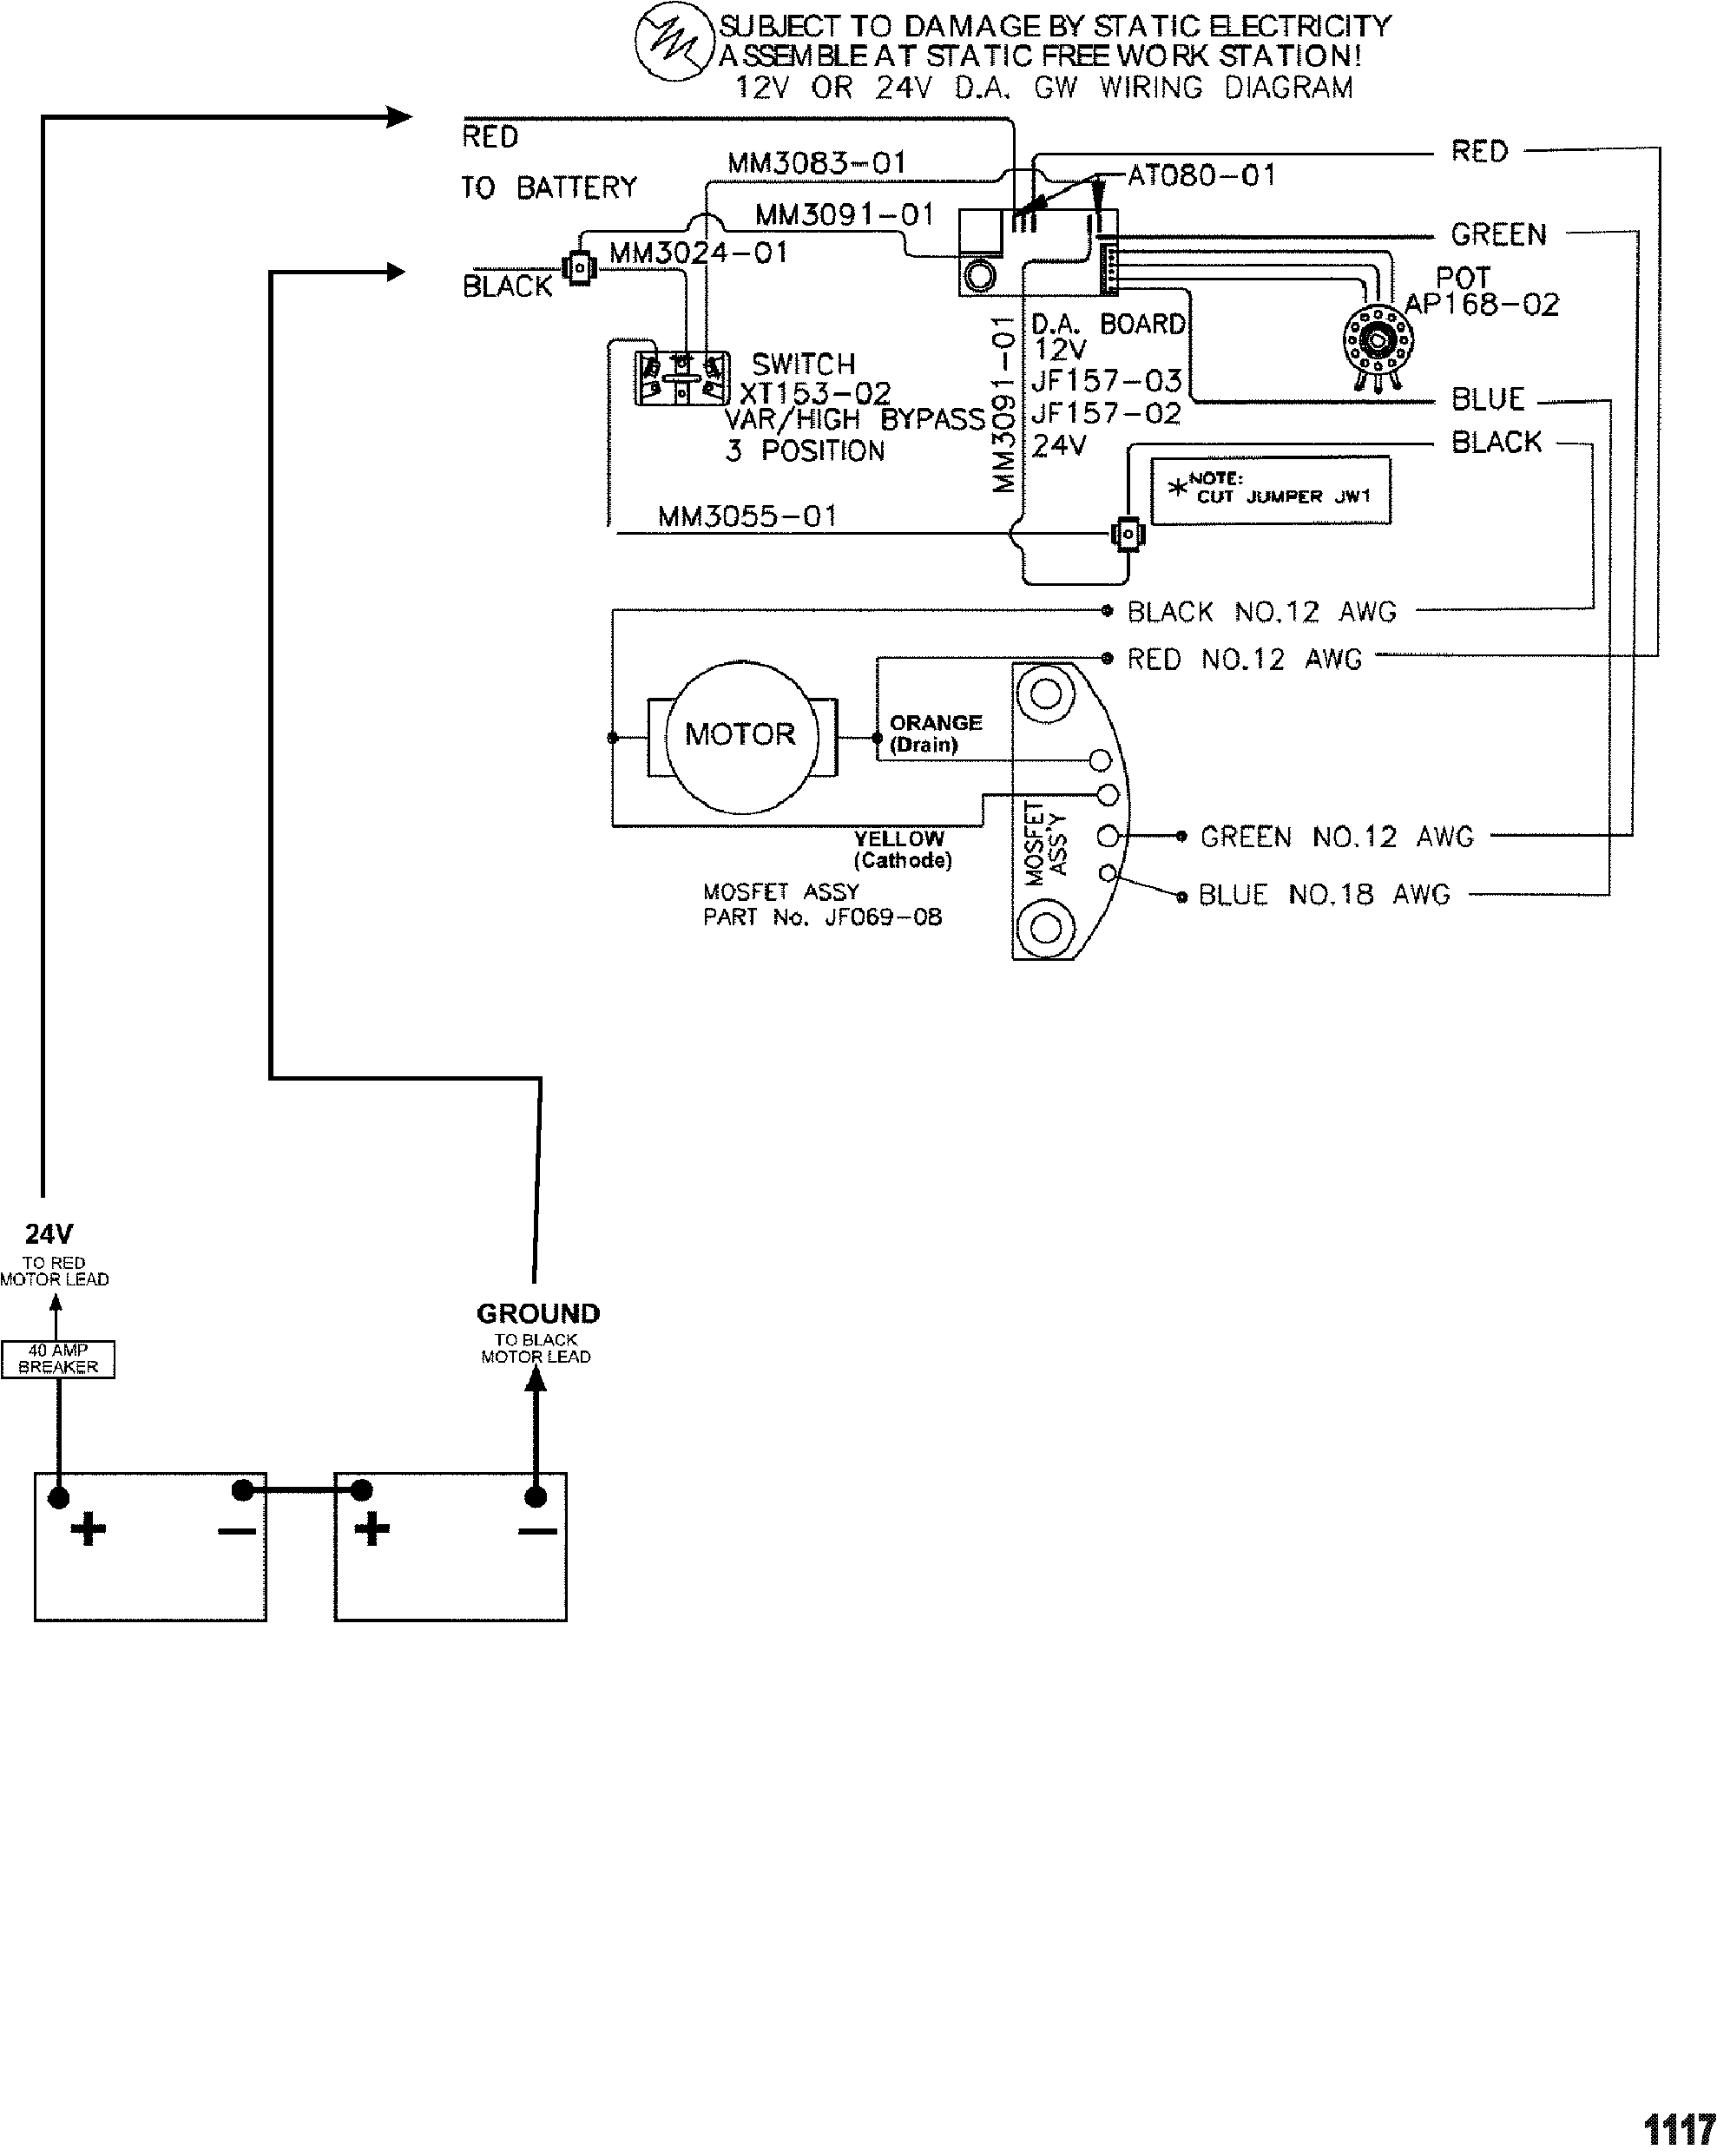 wiring diagram motorguide trolling motor